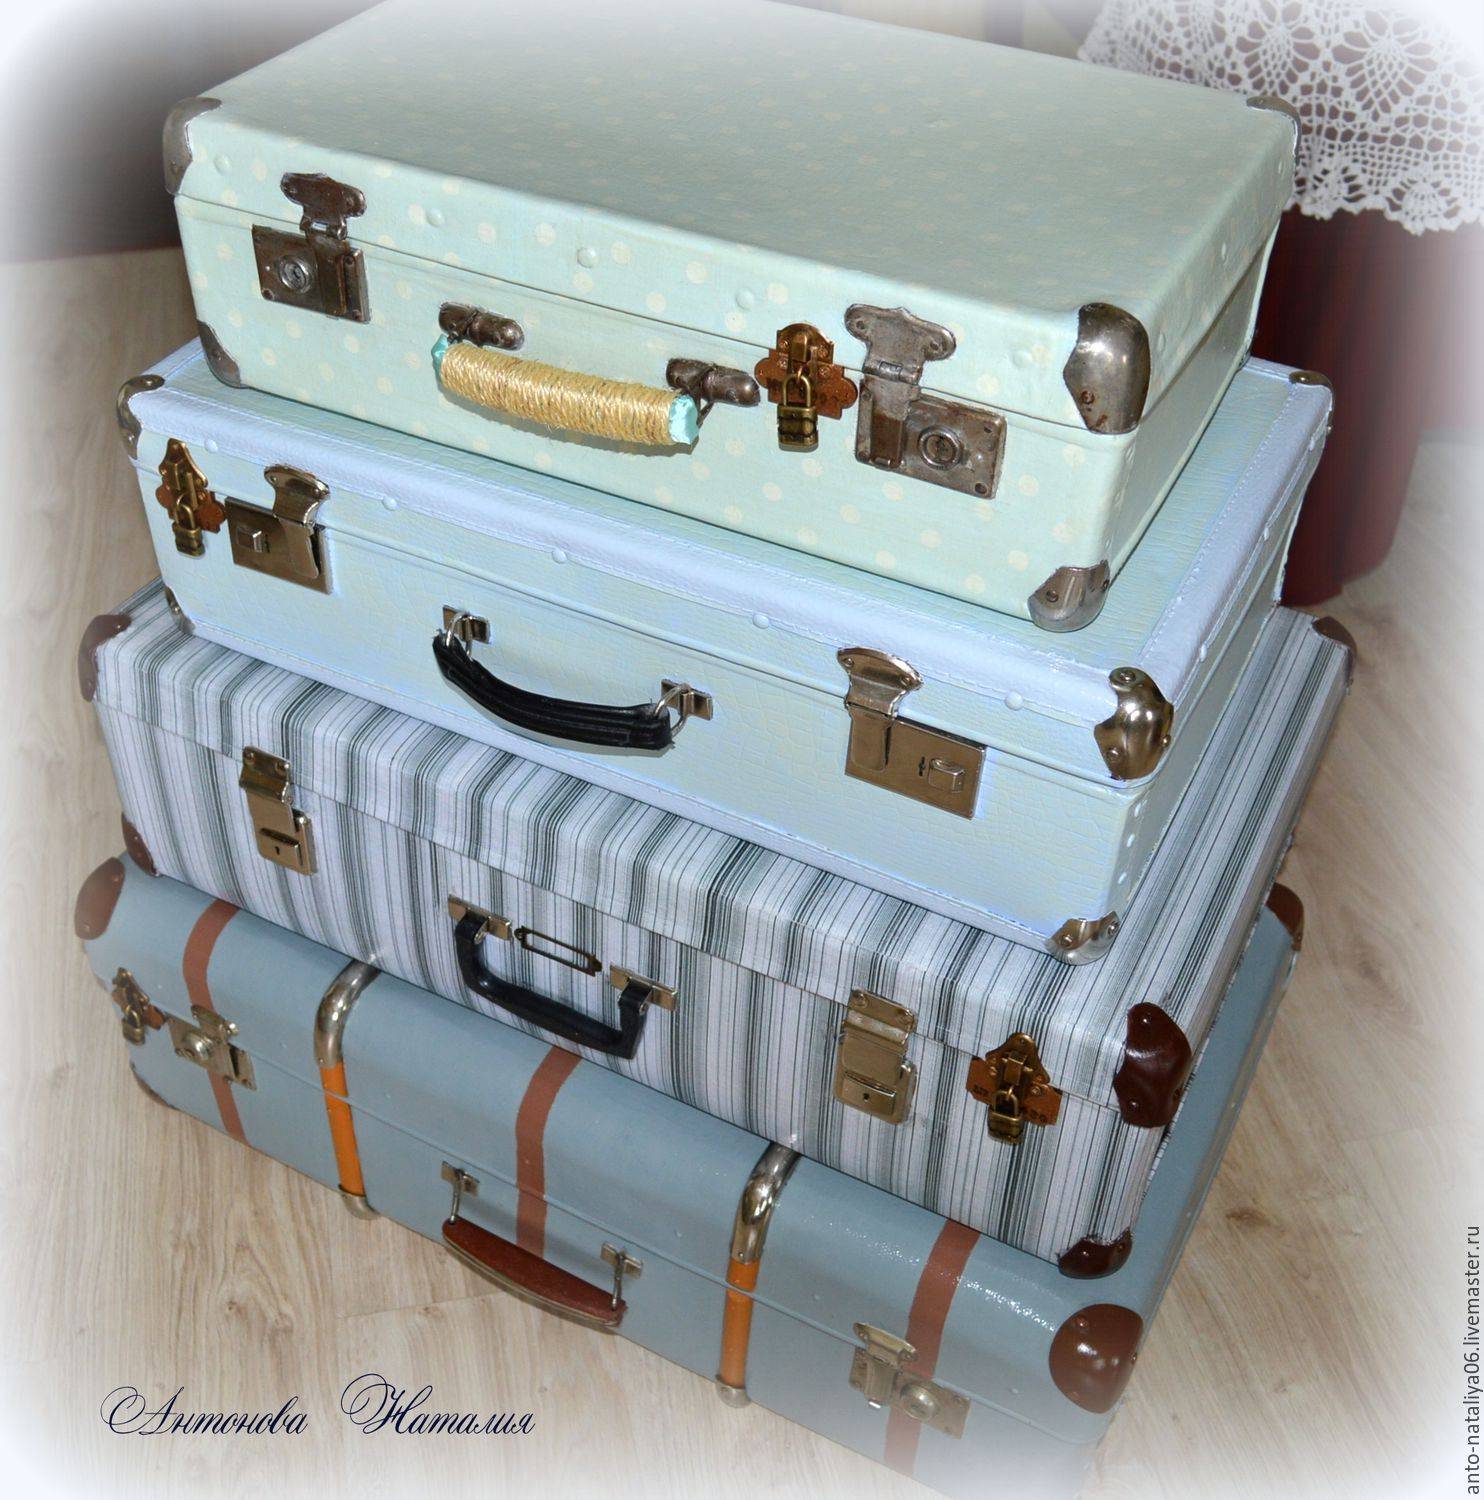 Декупаж старого чемодана: красивое украшение интерьера